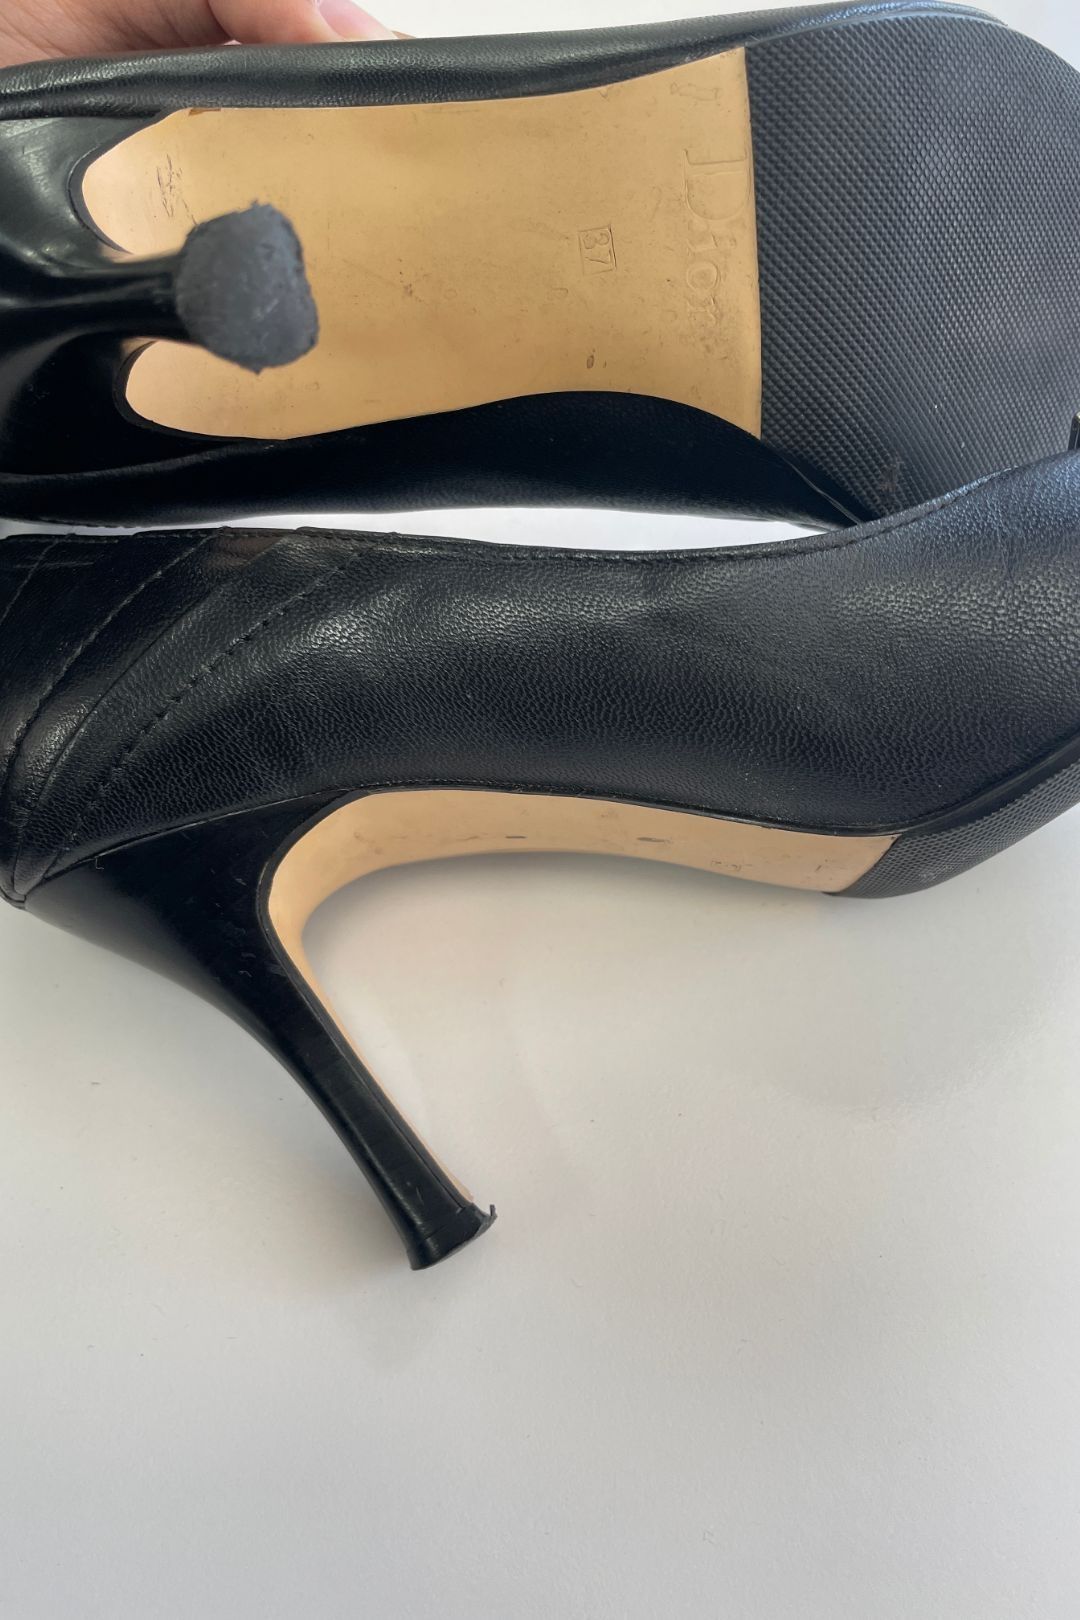 Dior Peep-Toe Black Stiletto Heels